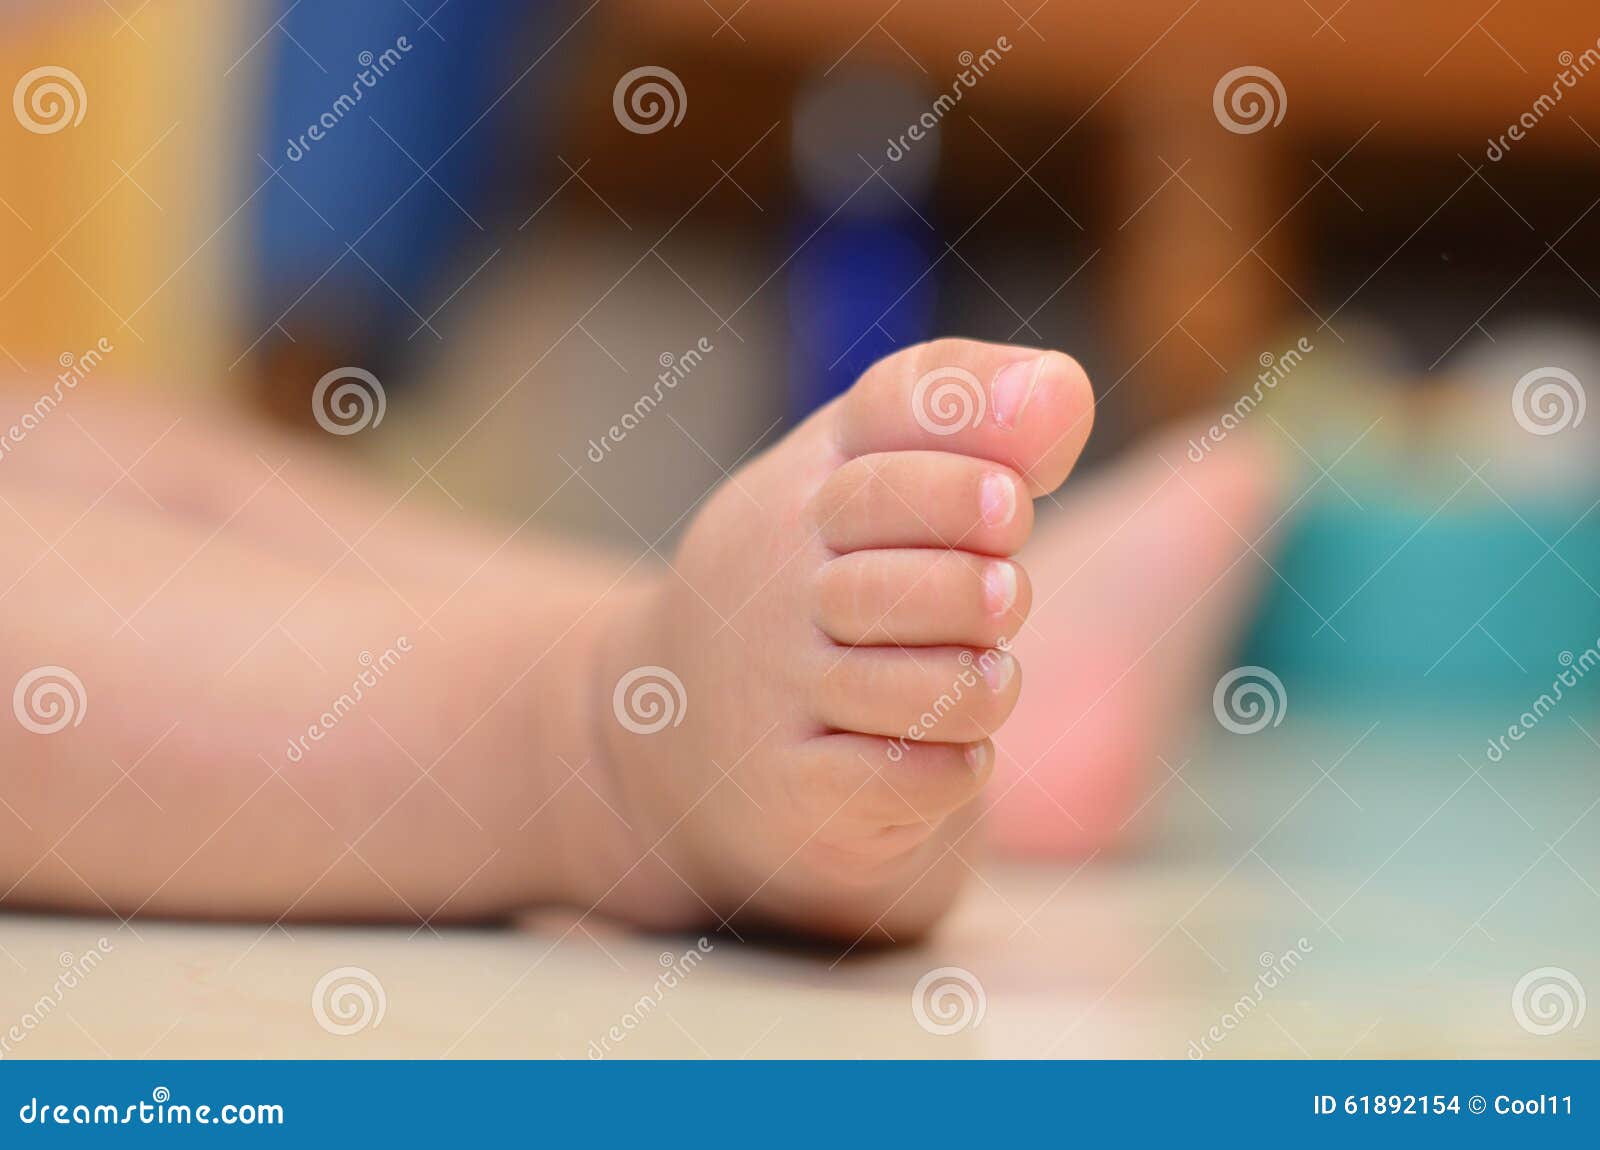 Pretty little feet